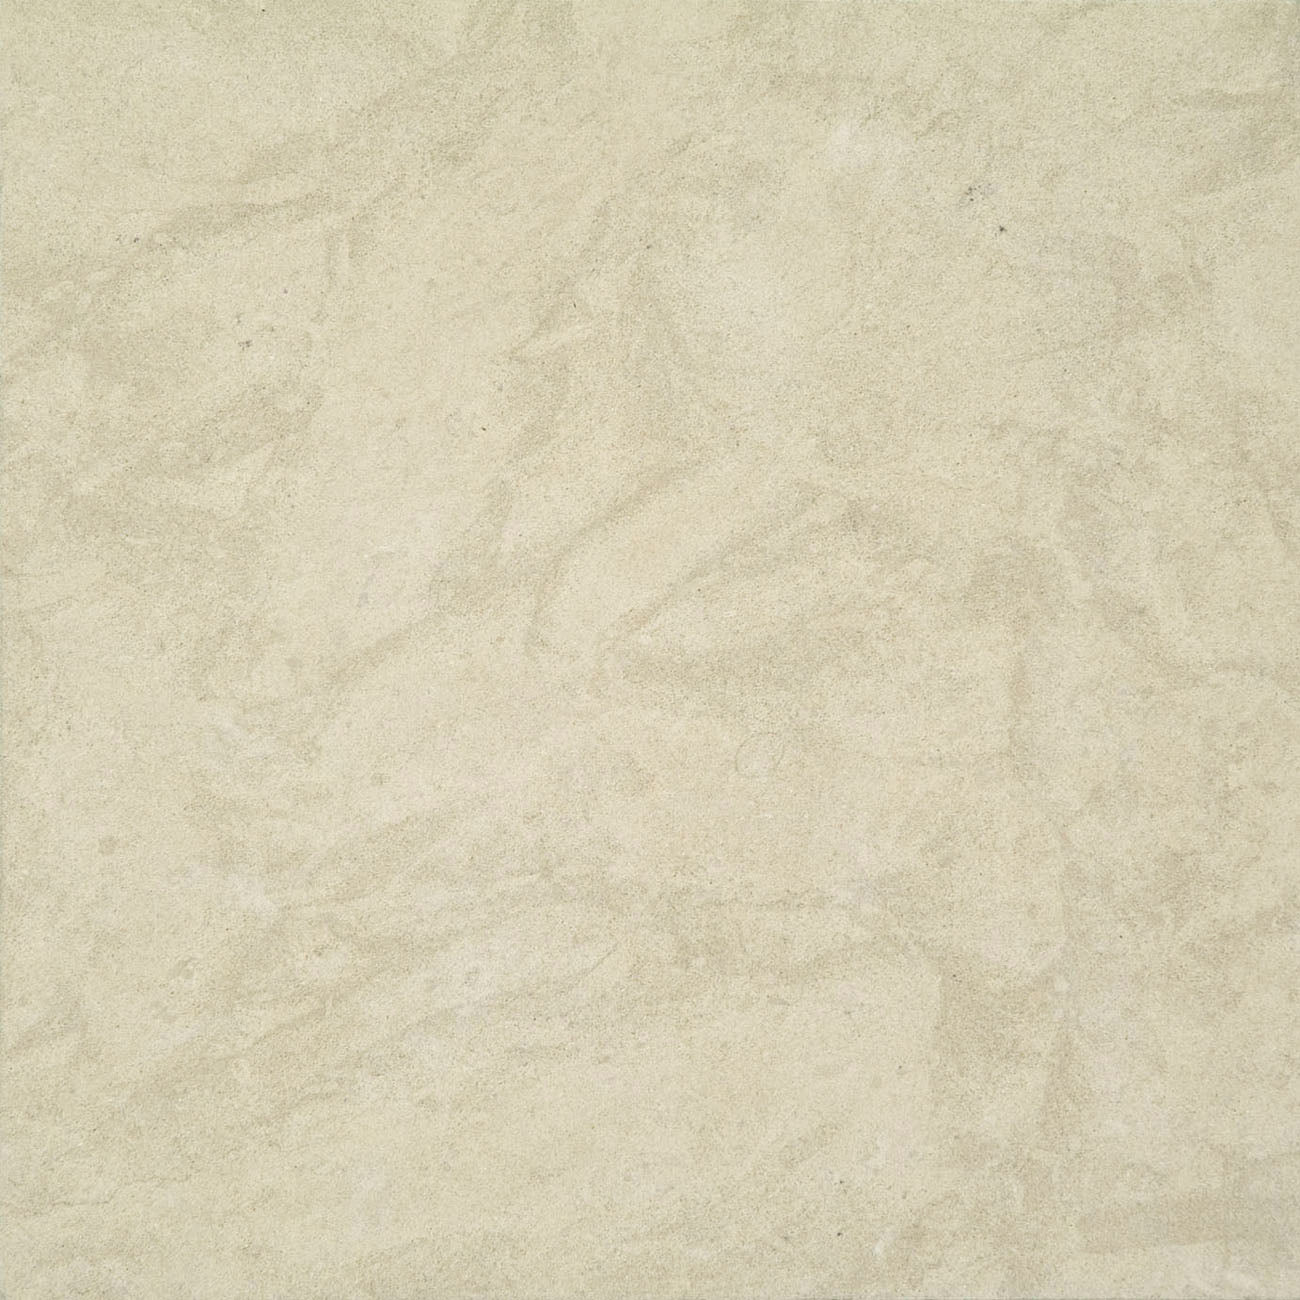 haussmann bateig beige limestone rectangle natural stone field tile 12x24 honed